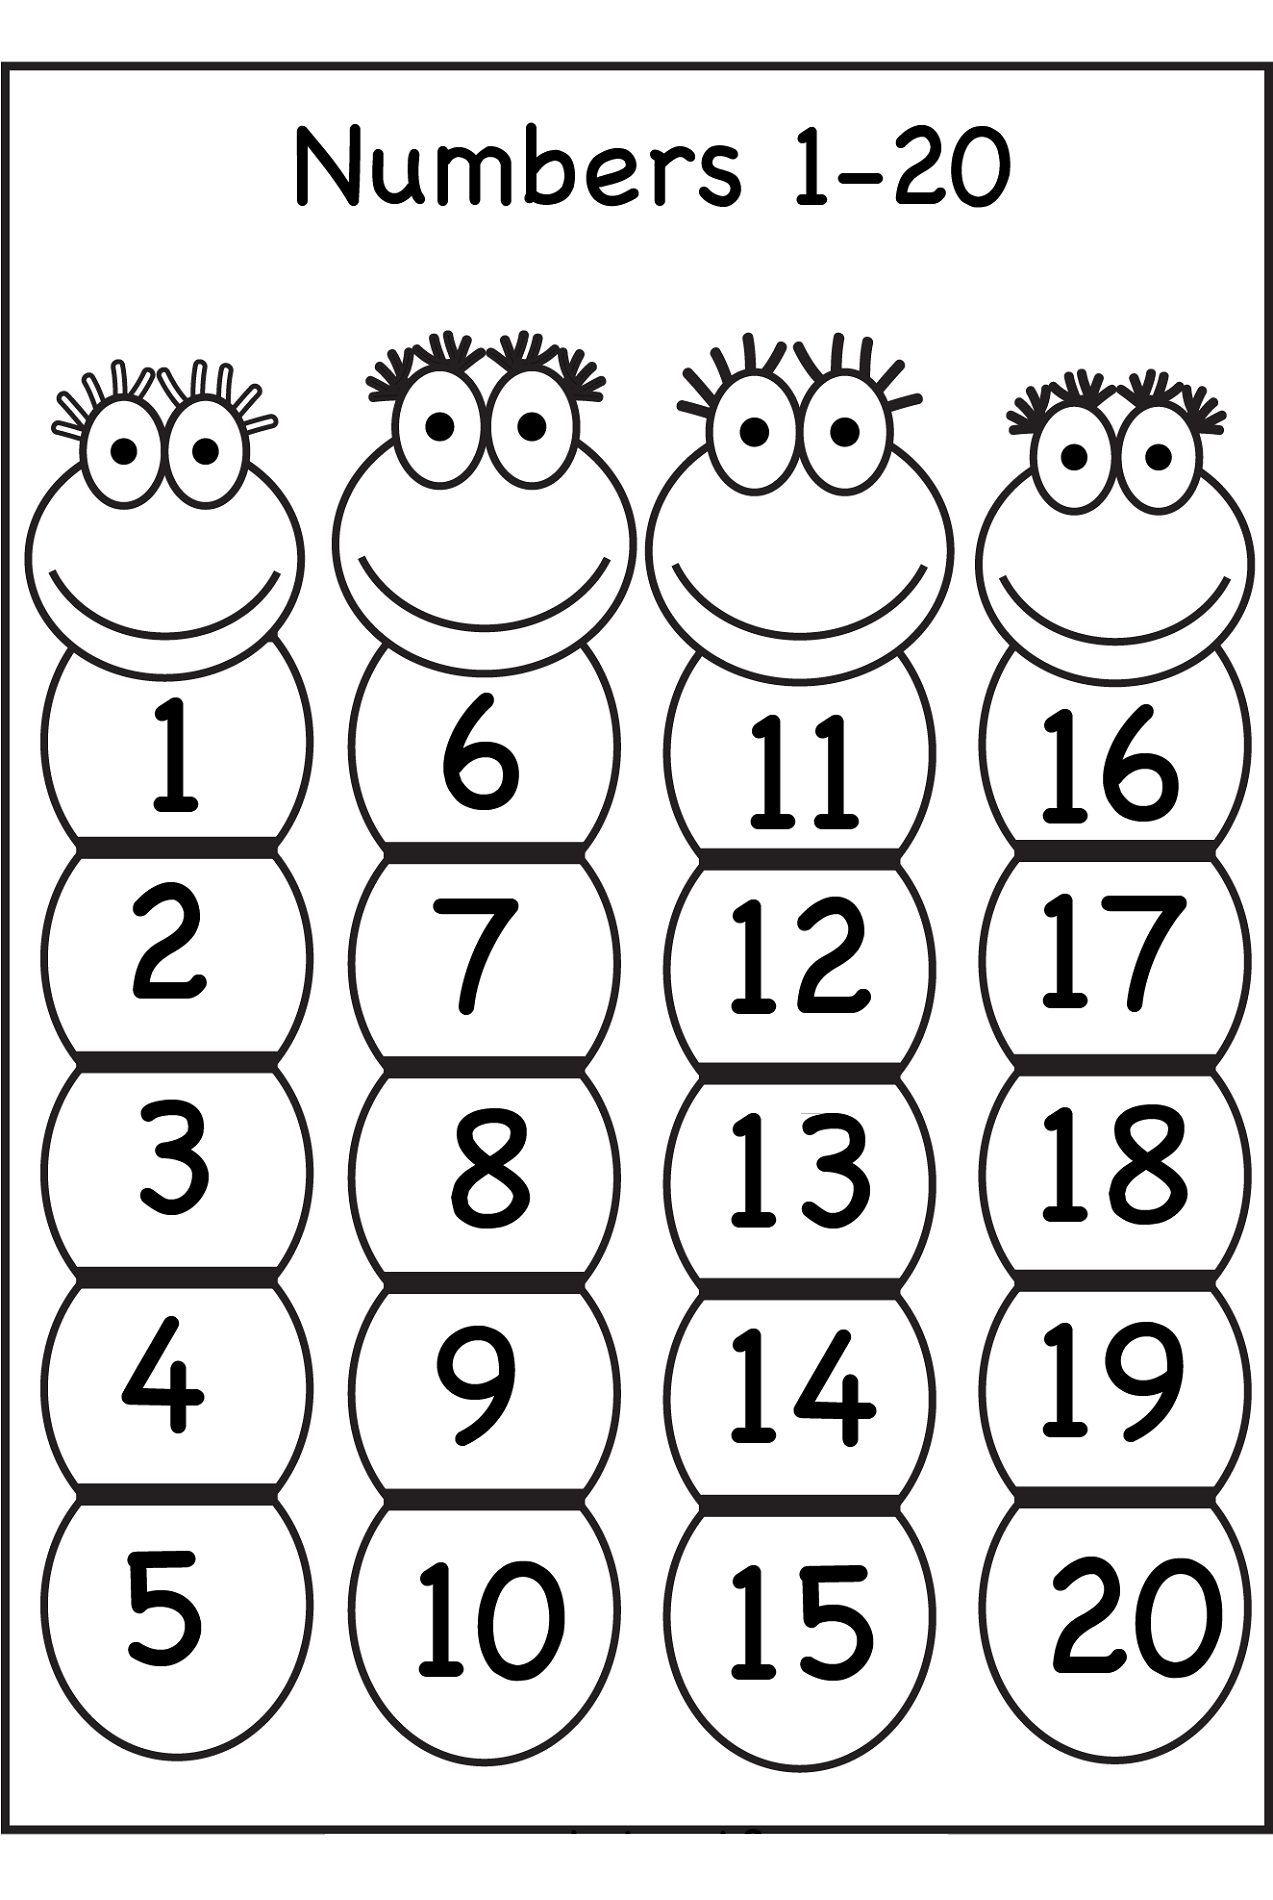 counting-8-worksheets-preschool-worksheets-printable-number-20-worksheets-activity-shelter